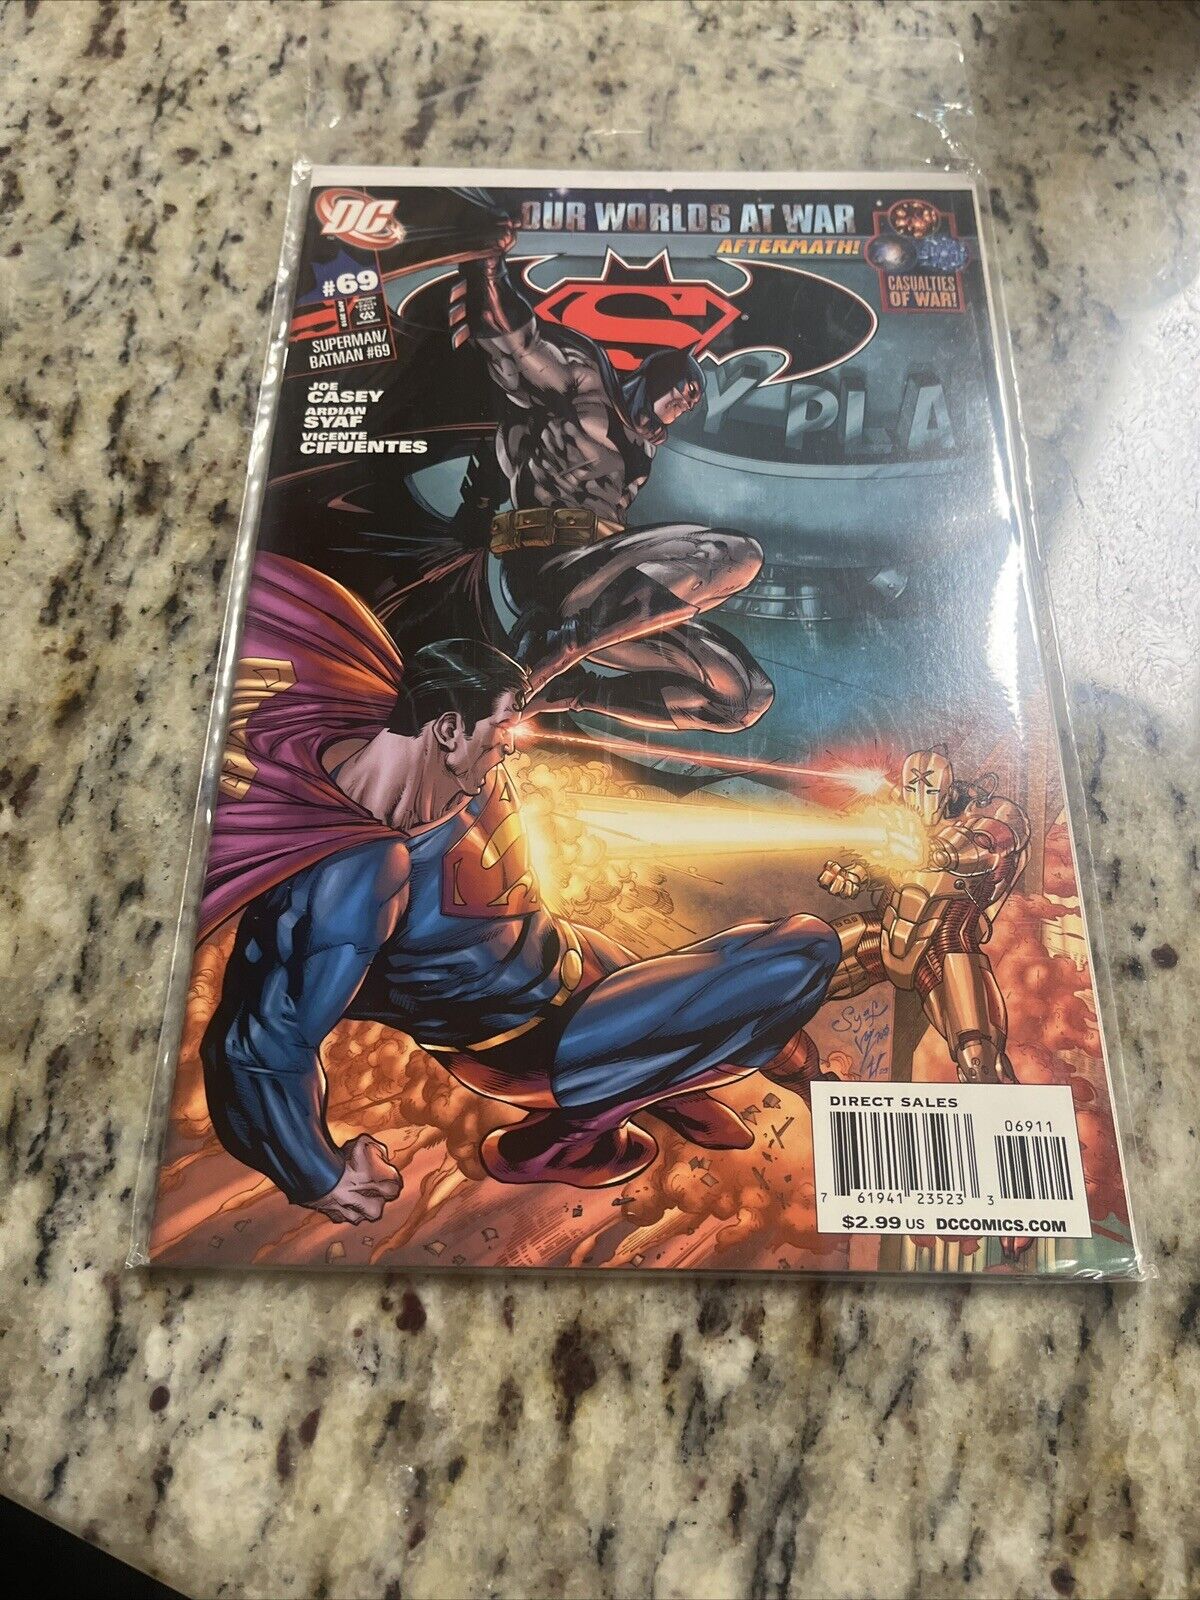 Superman / Batman #69 - Our Worlds At War (DC Comics, 2010) 